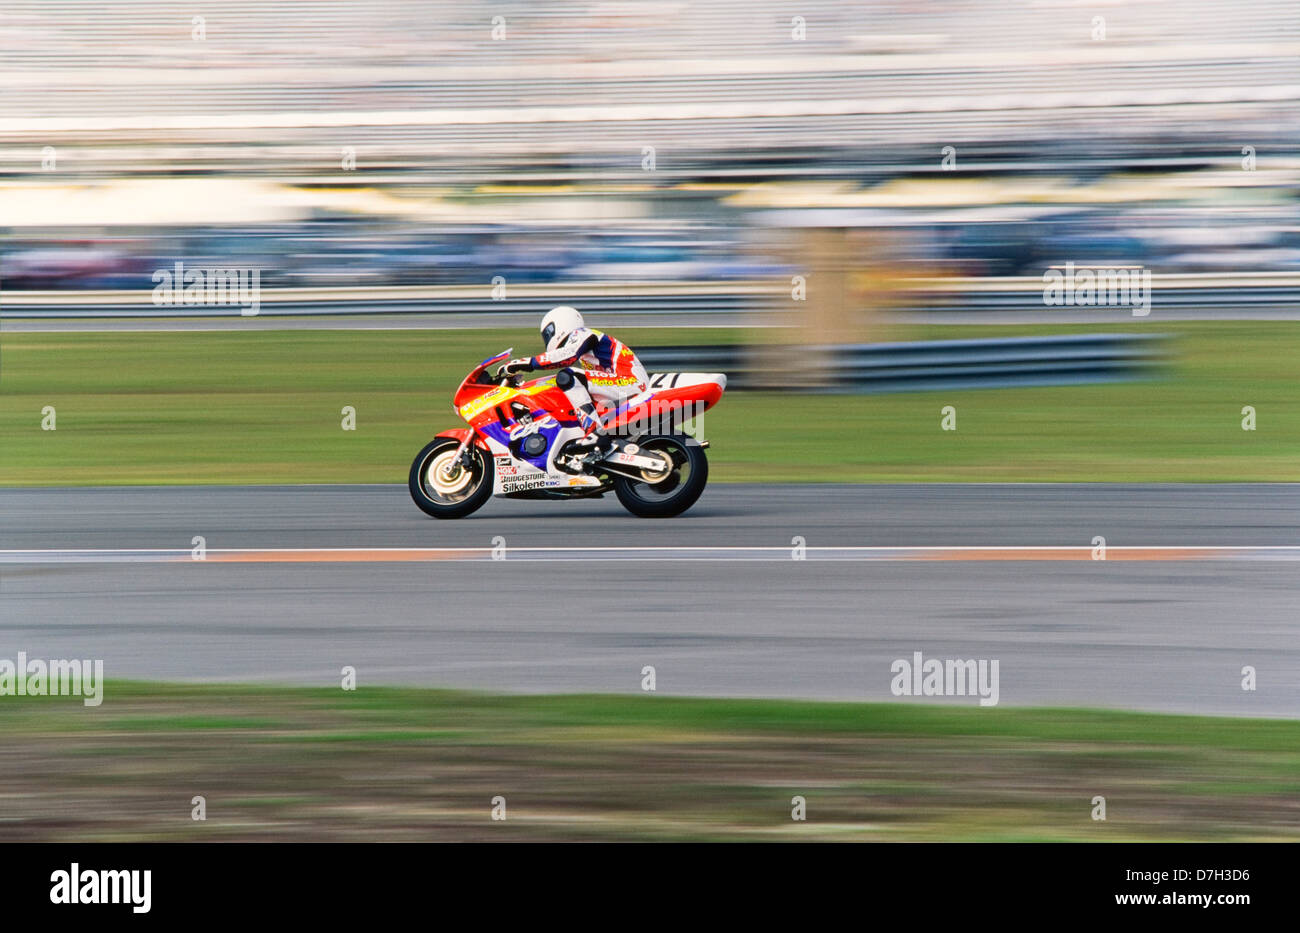 Moto Racing, Daytona Speedway, Florida, velocità gli effetti sfocati. Foto Stock